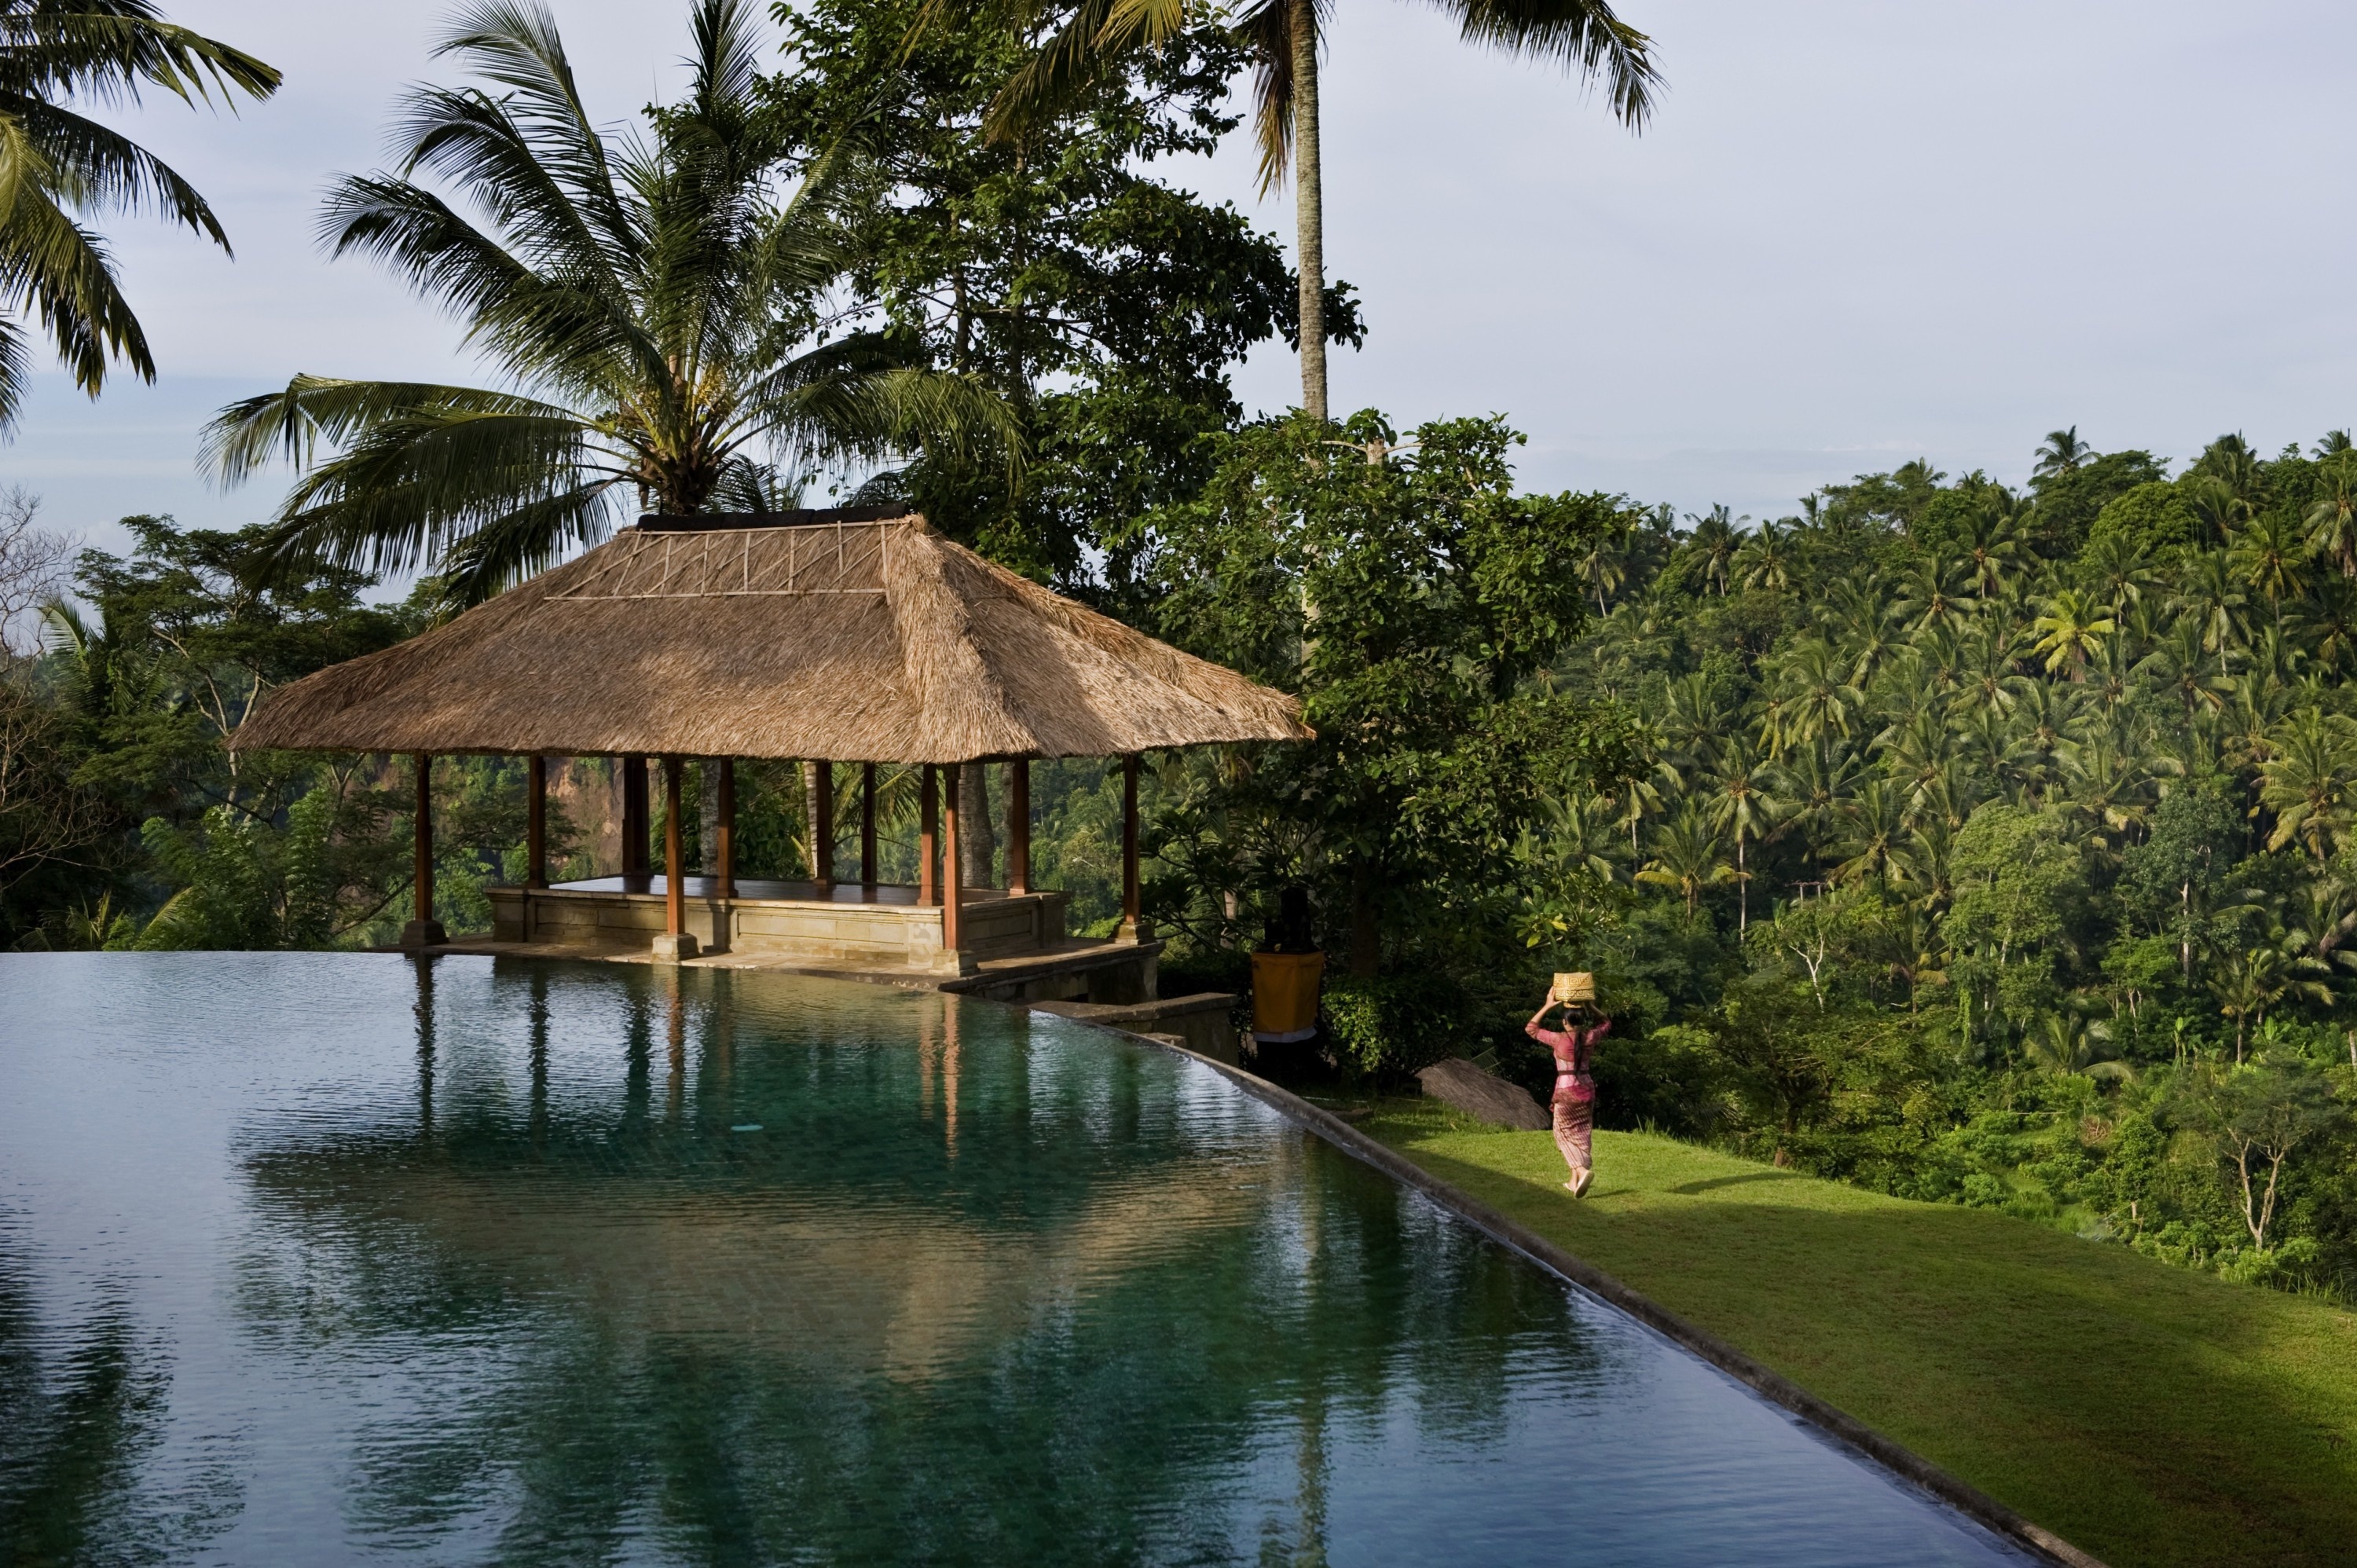 Bali's HD background, Breathtaking beauty, Captivating scenery, Visual treat, 3000x2000 HD Desktop